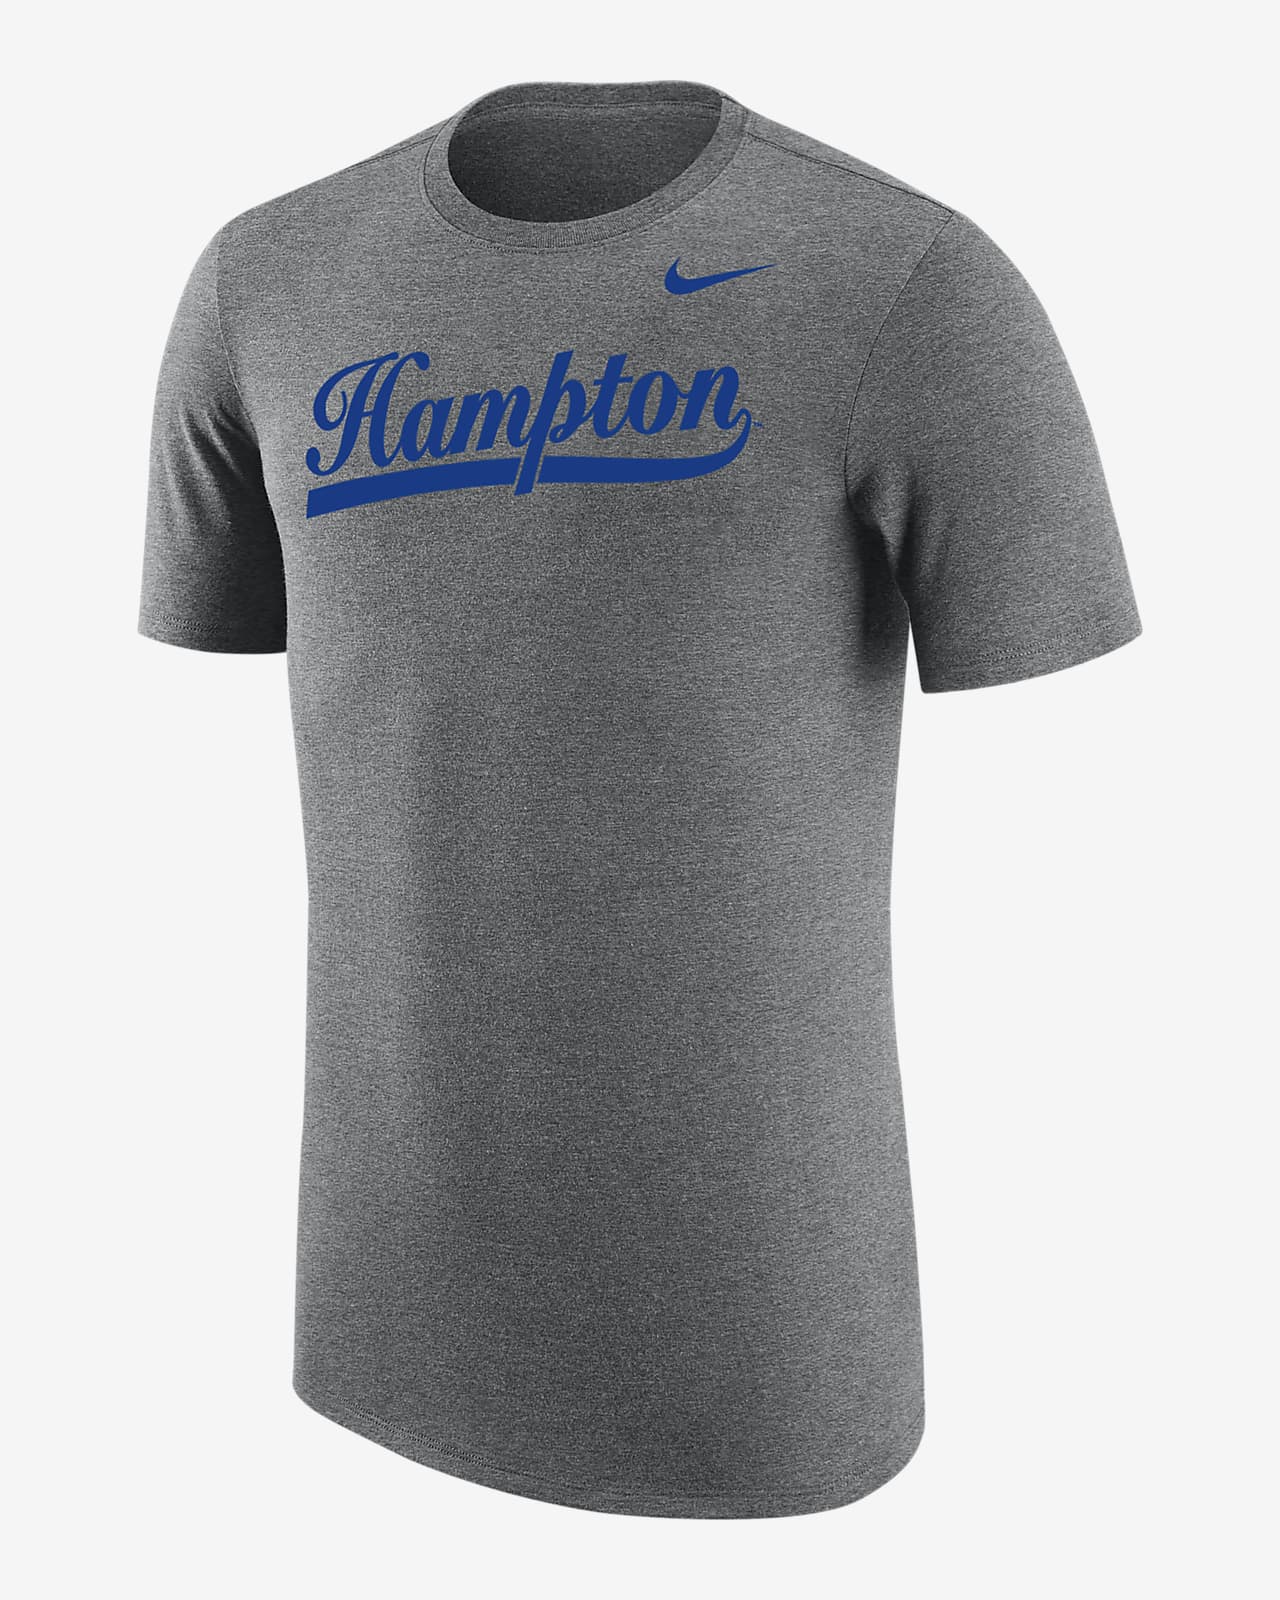 Hampton Men's Nike College T-Shirt